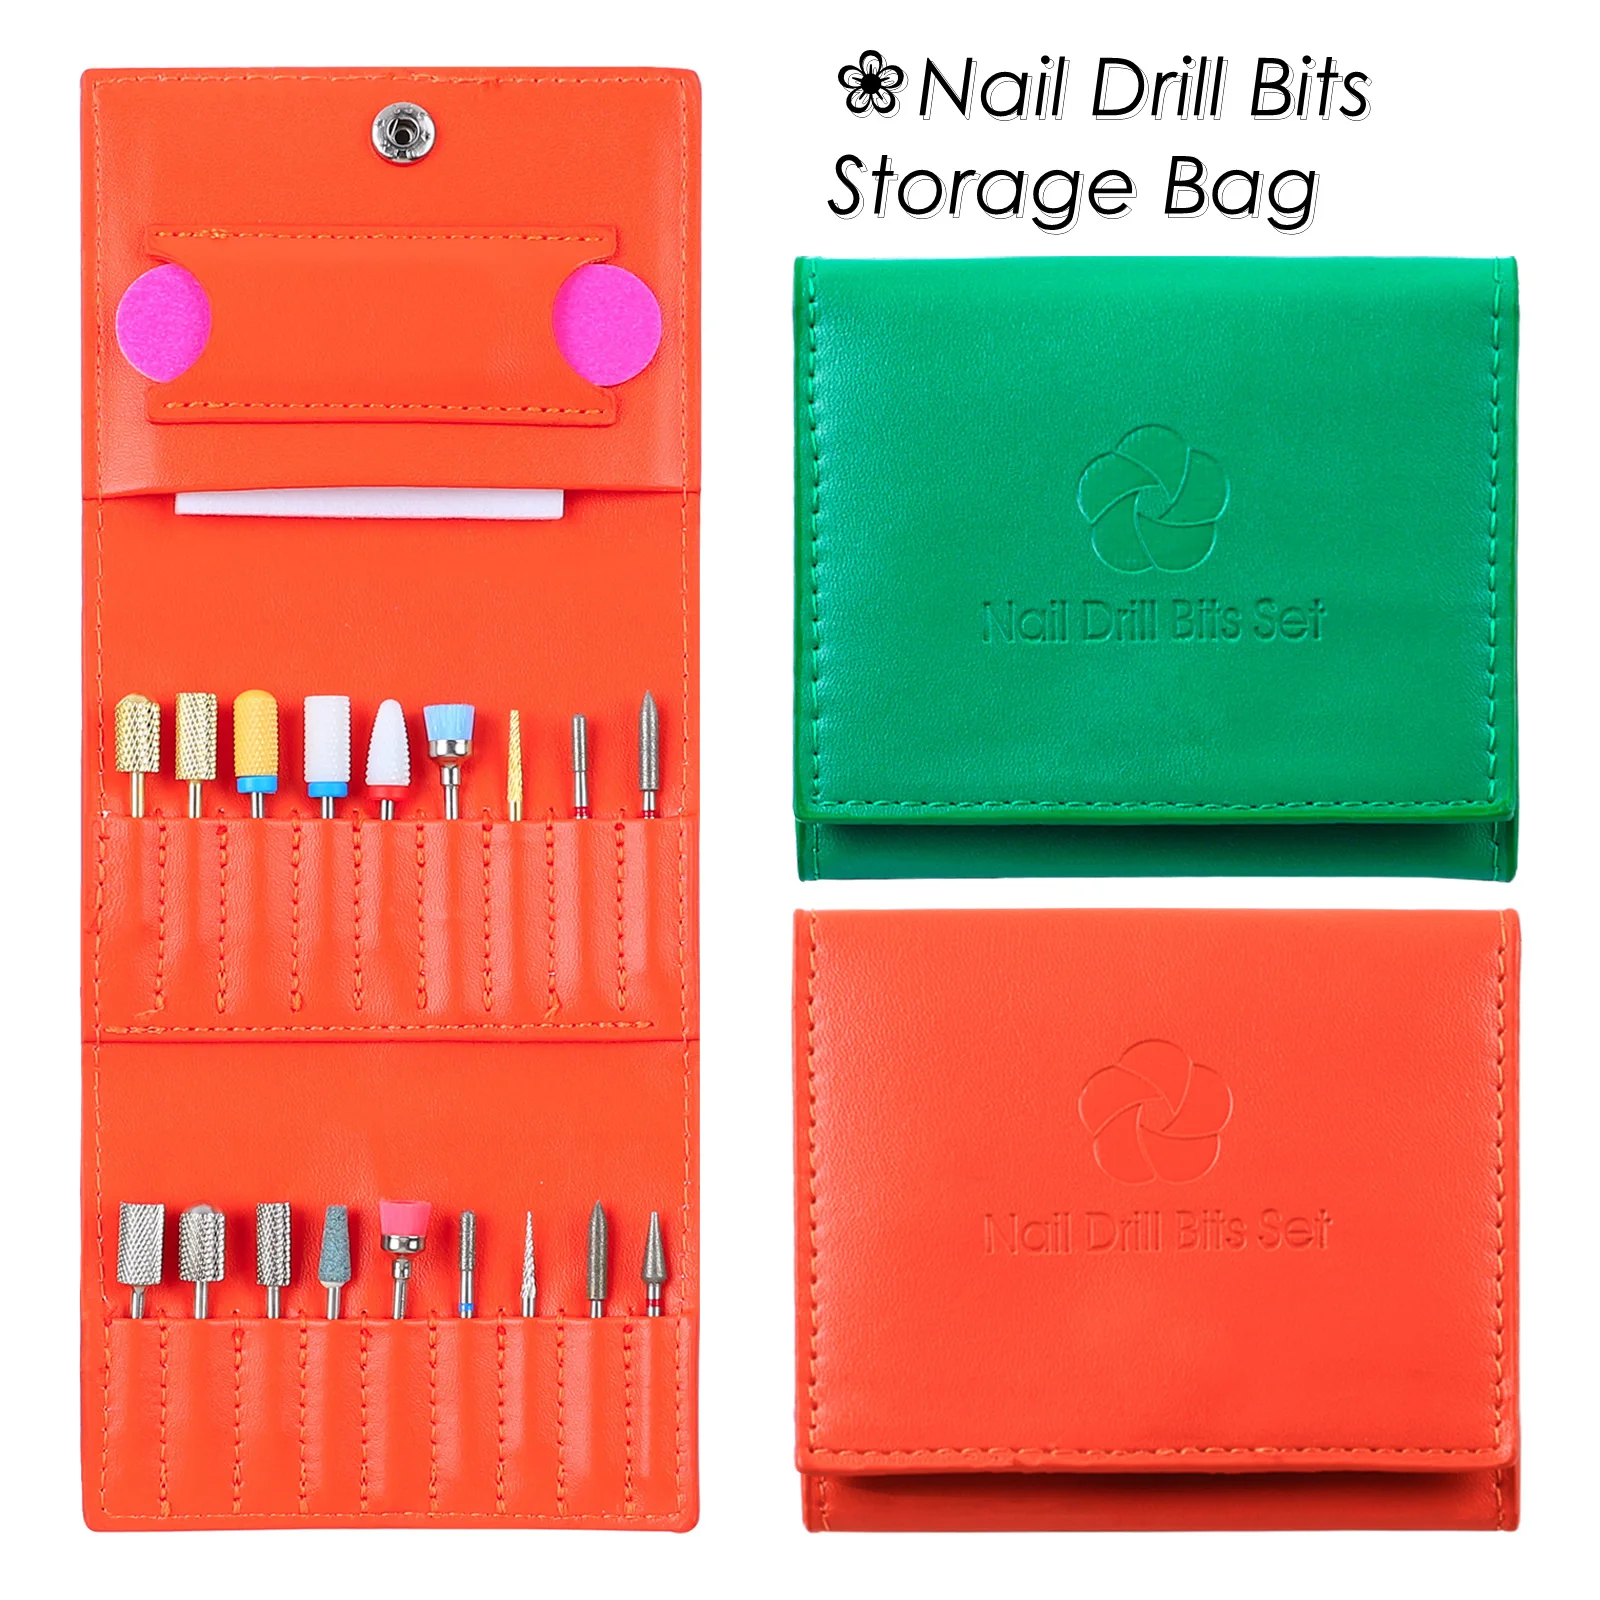 Folding Nail Drill Bits Holder 18 Holes Storage Bag Portable Milling Cutter Grinding Head Storage Display Orange Color